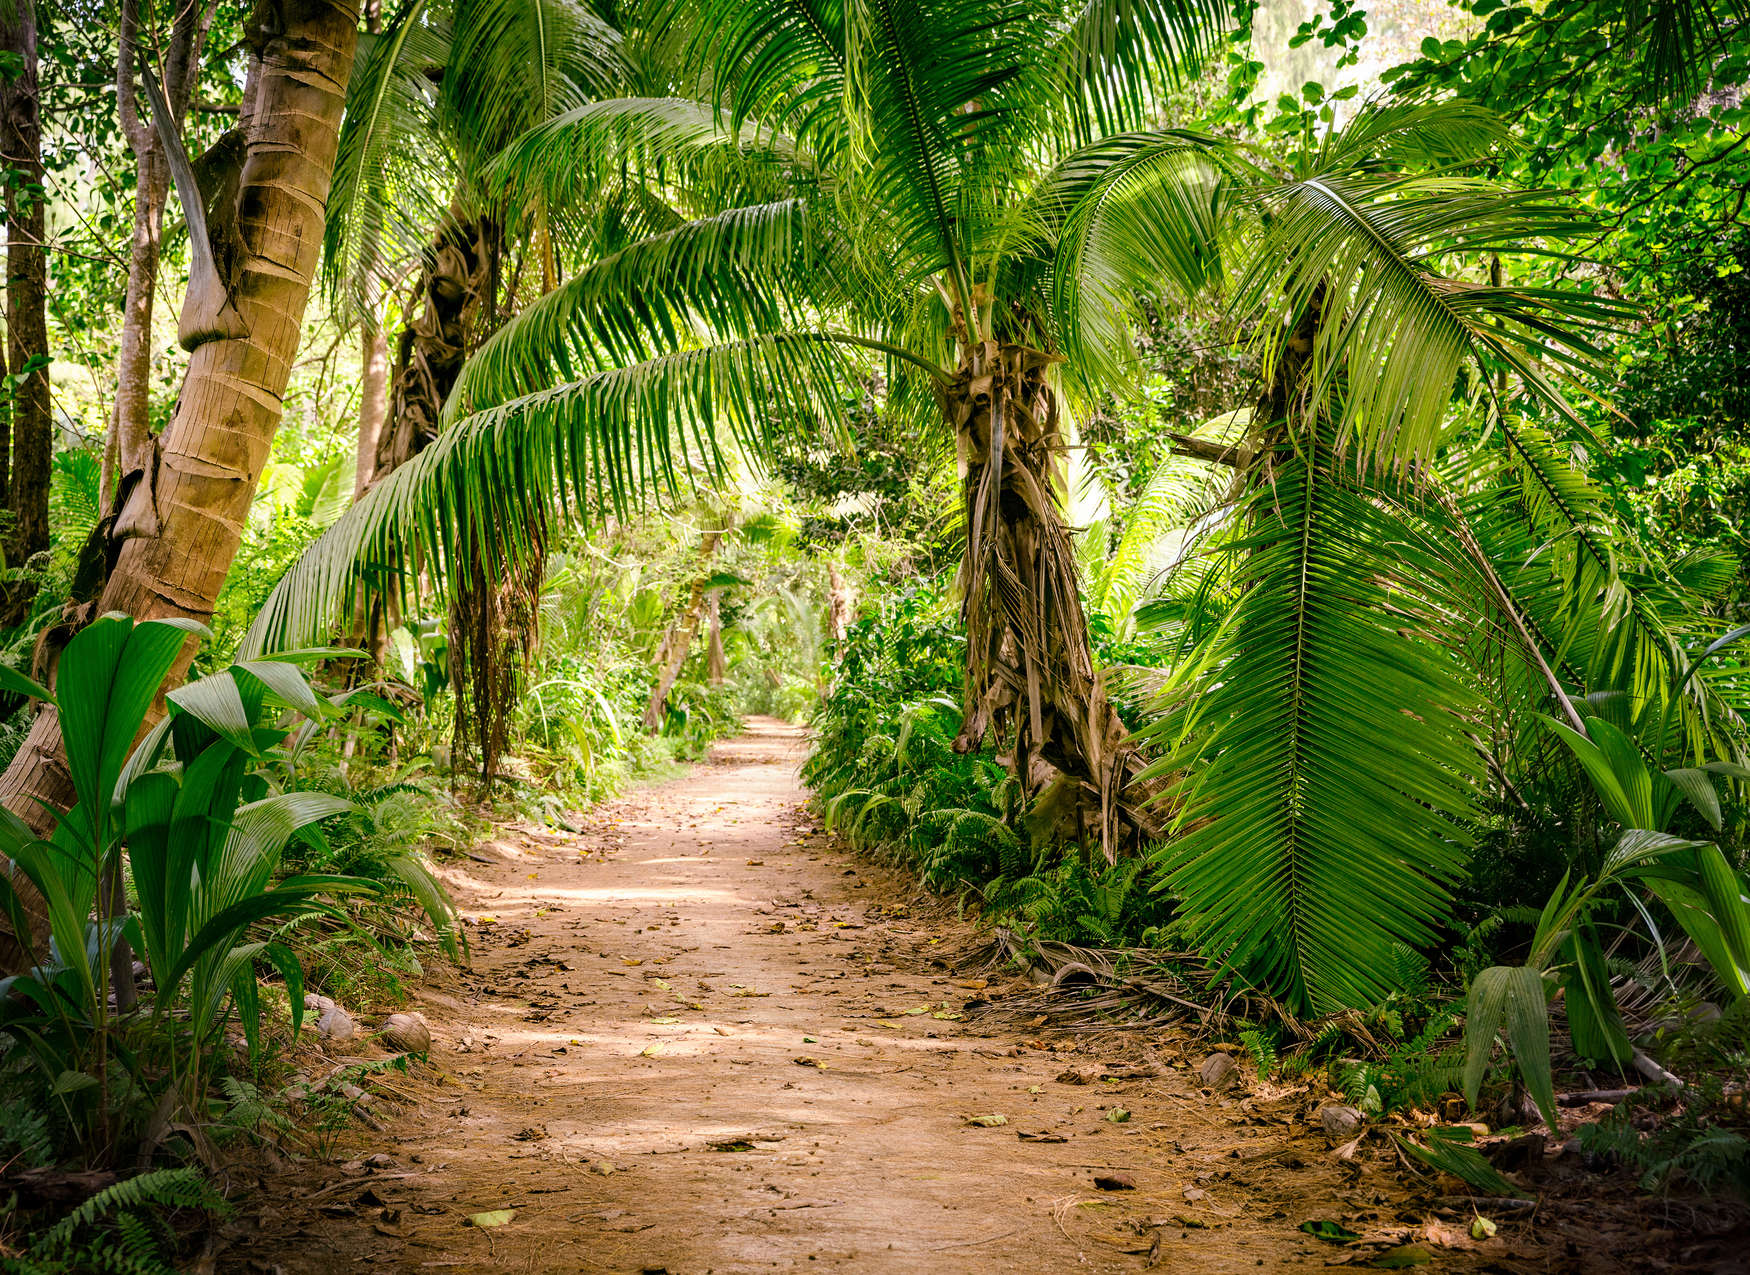             Palm tree path through a tropical landscape - green, brown
        